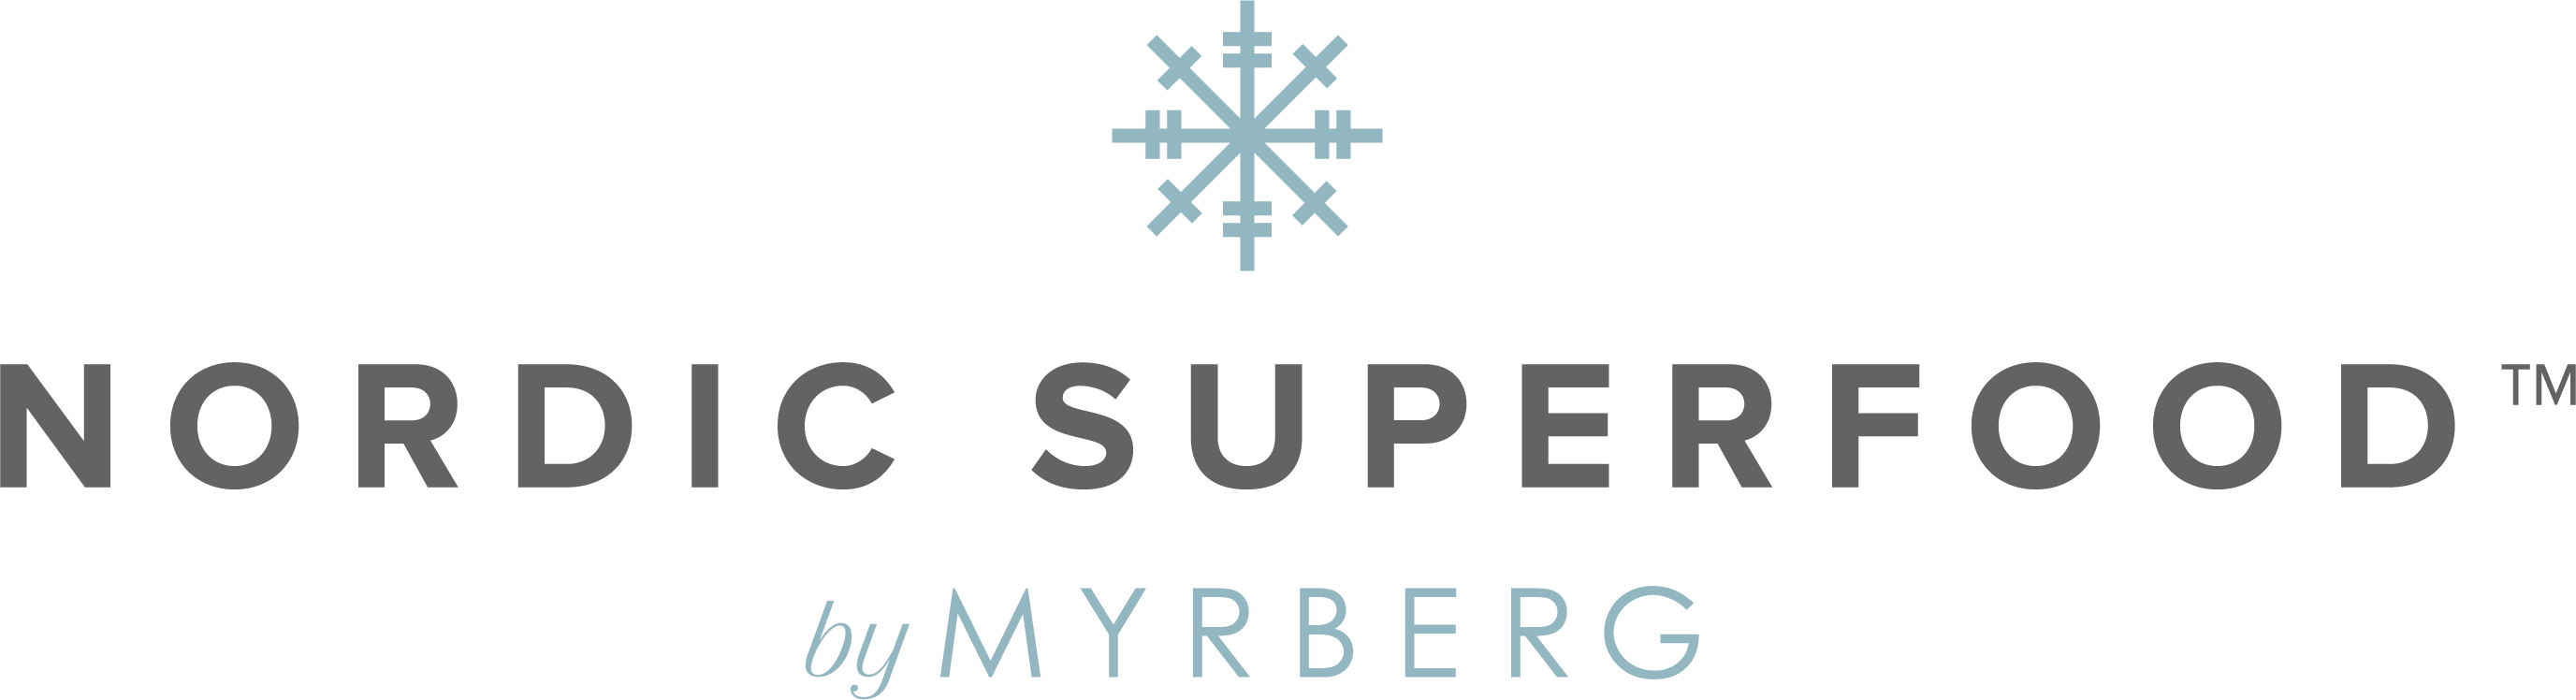 byMyrberg logo